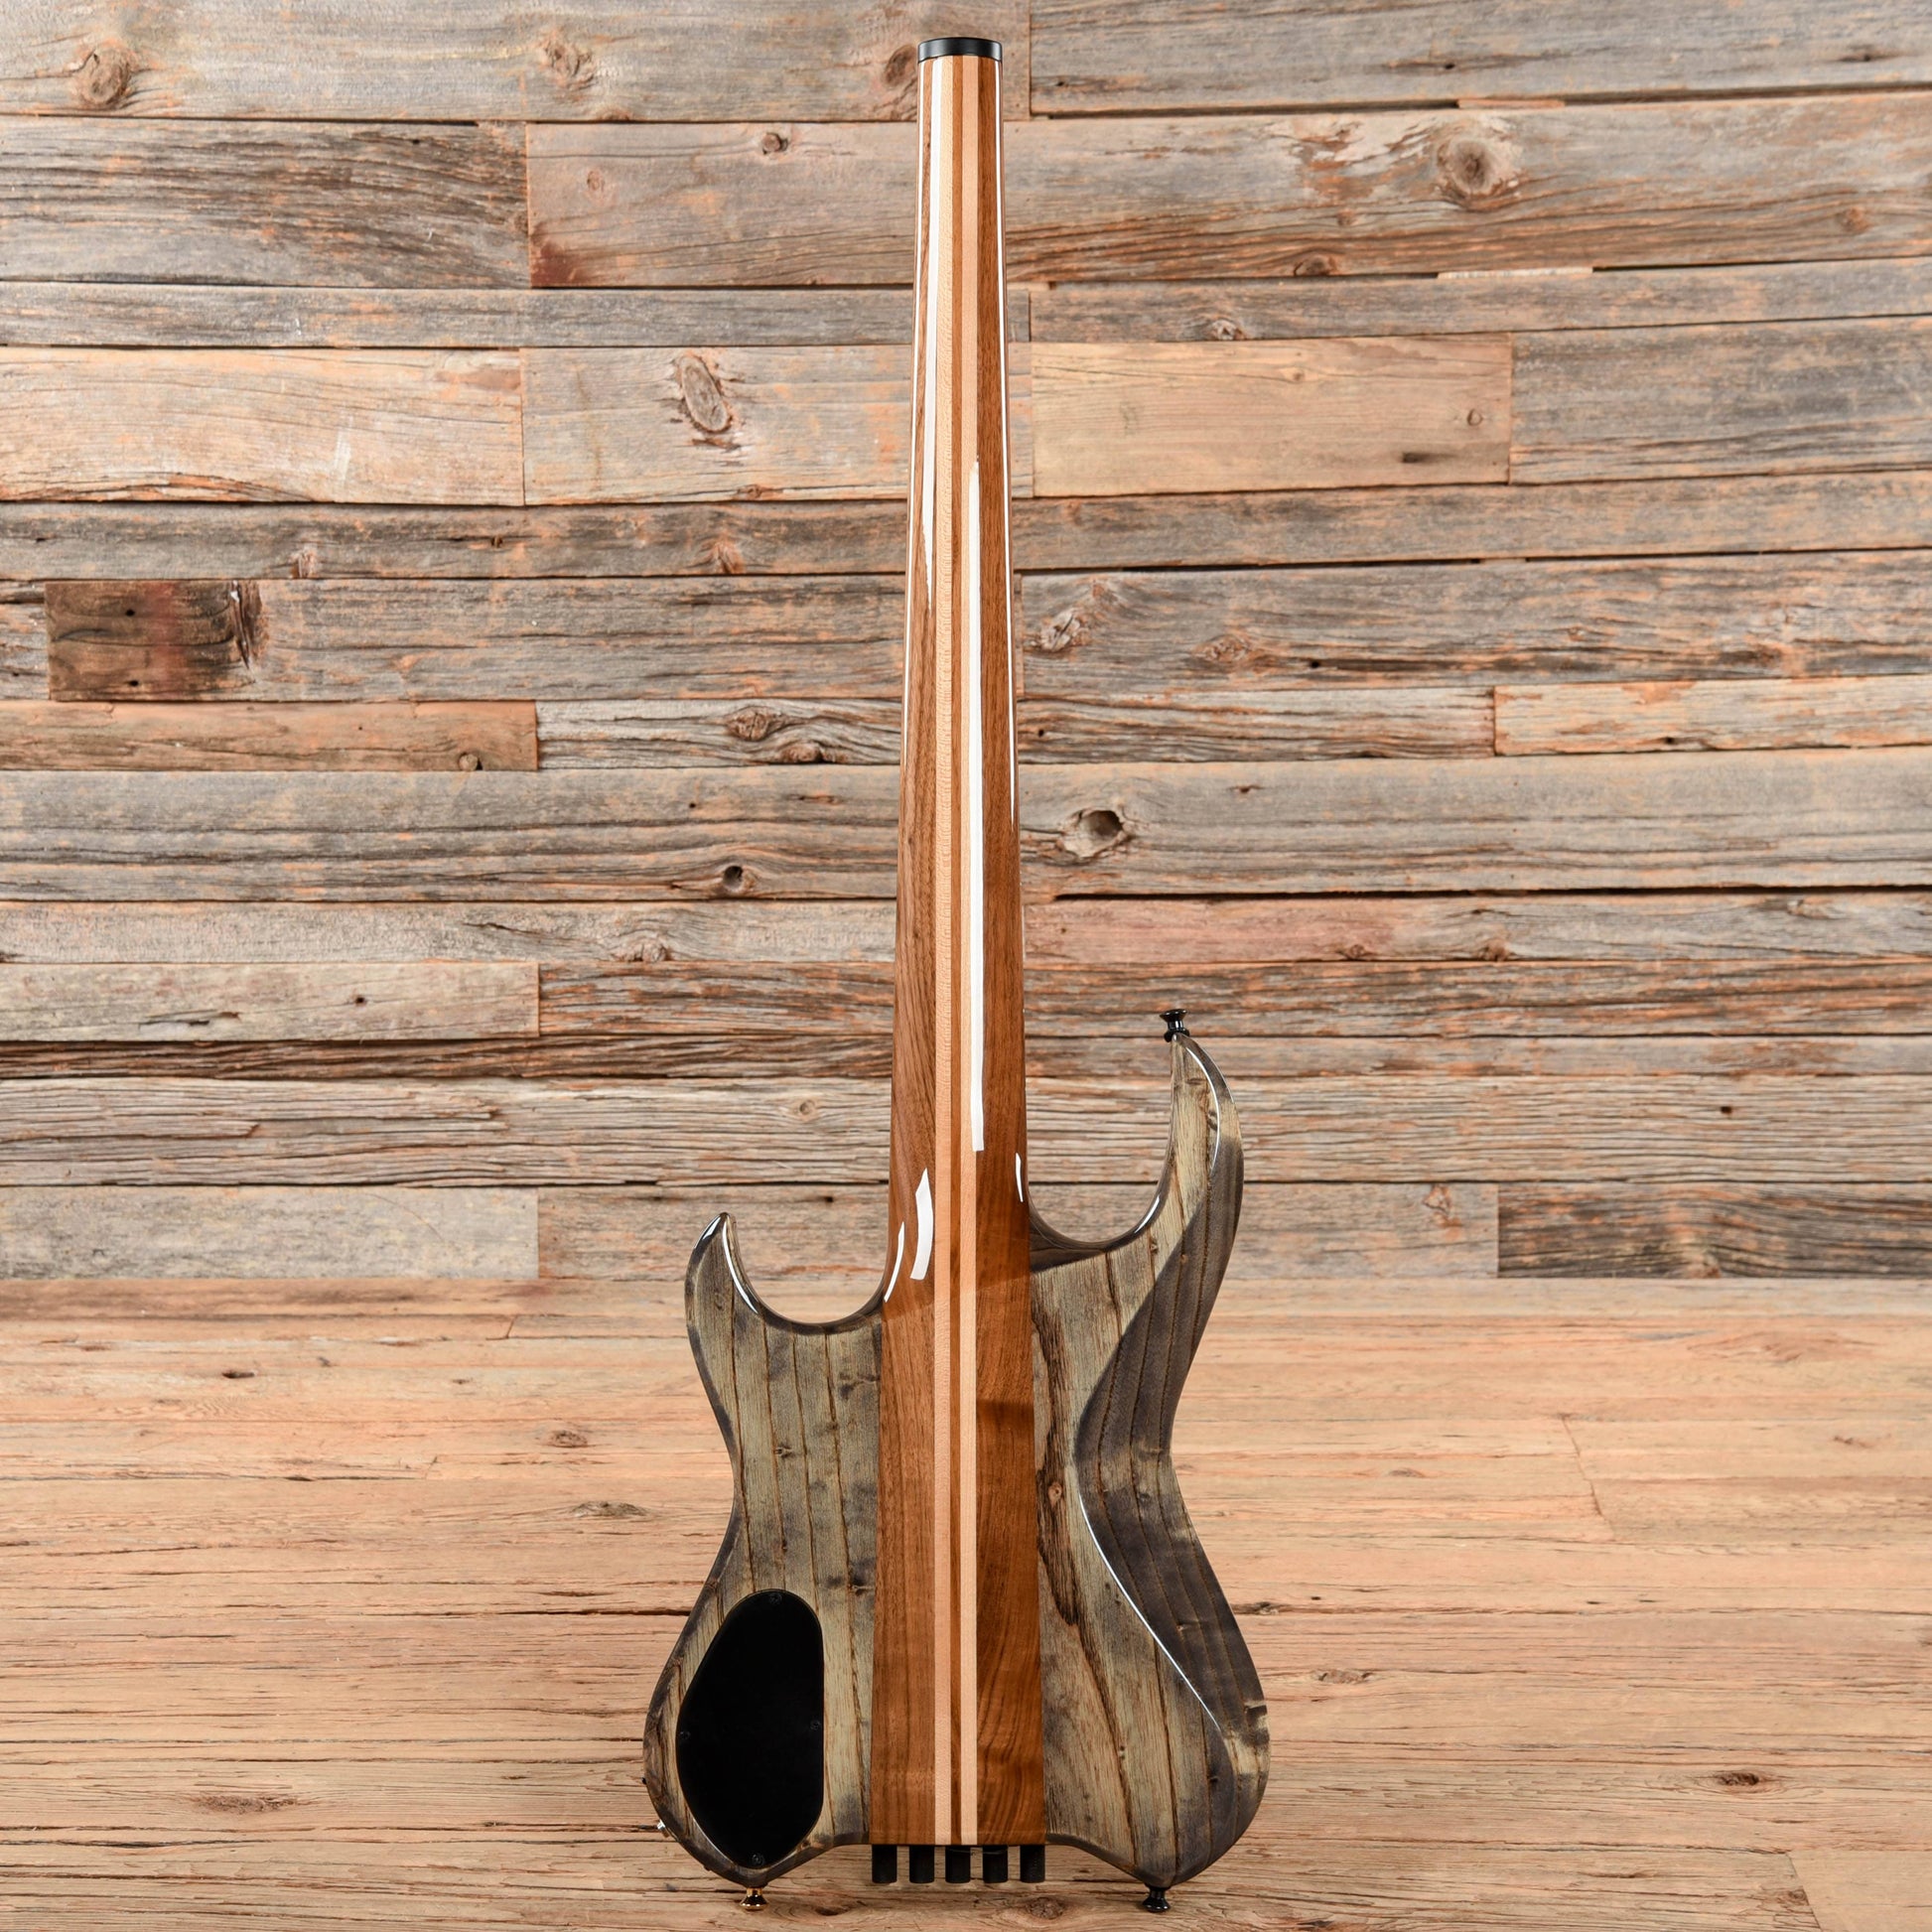 Kiesel Vader 5-String Sunburst 2013 Bass Guitars / 5-String or More